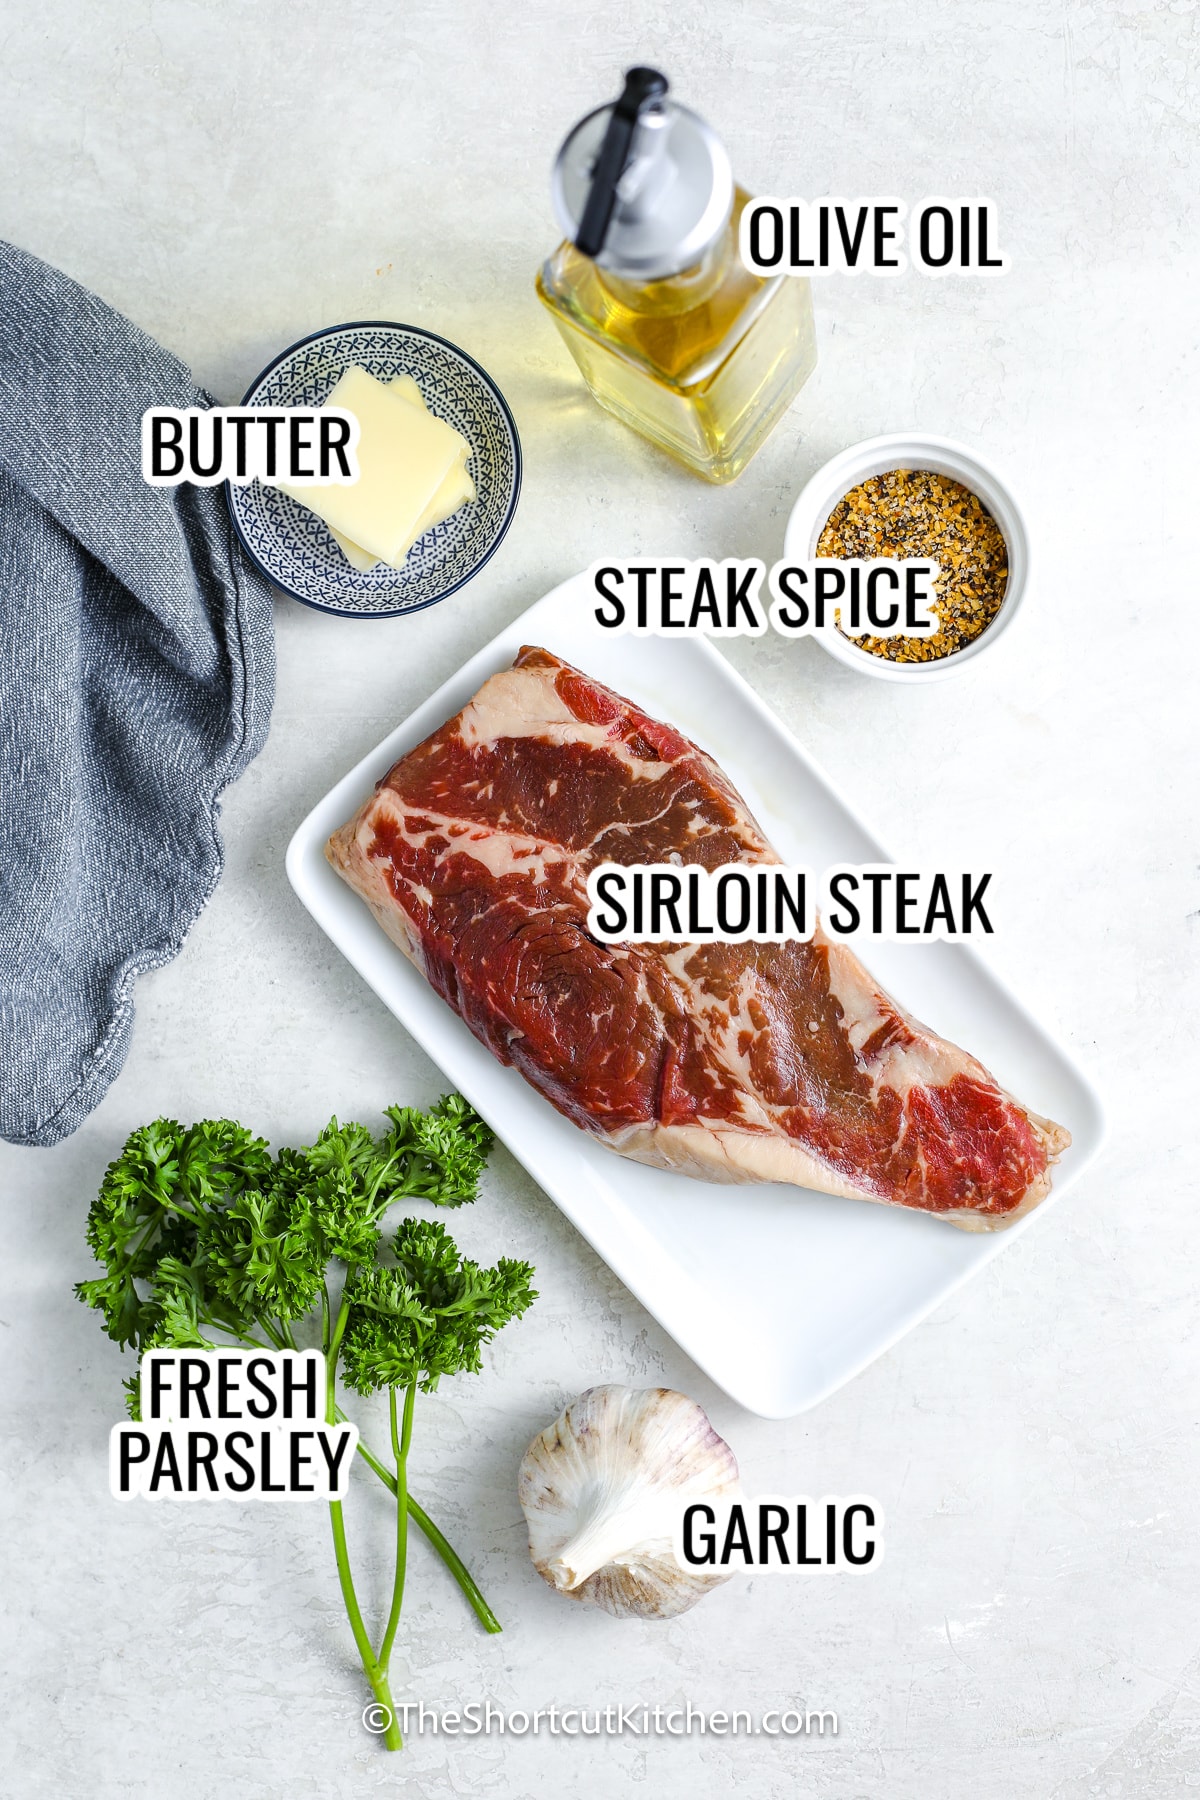 ingredients assembled to make garlic steak bites including steak, butter, garlic, olive oil, and steak spice